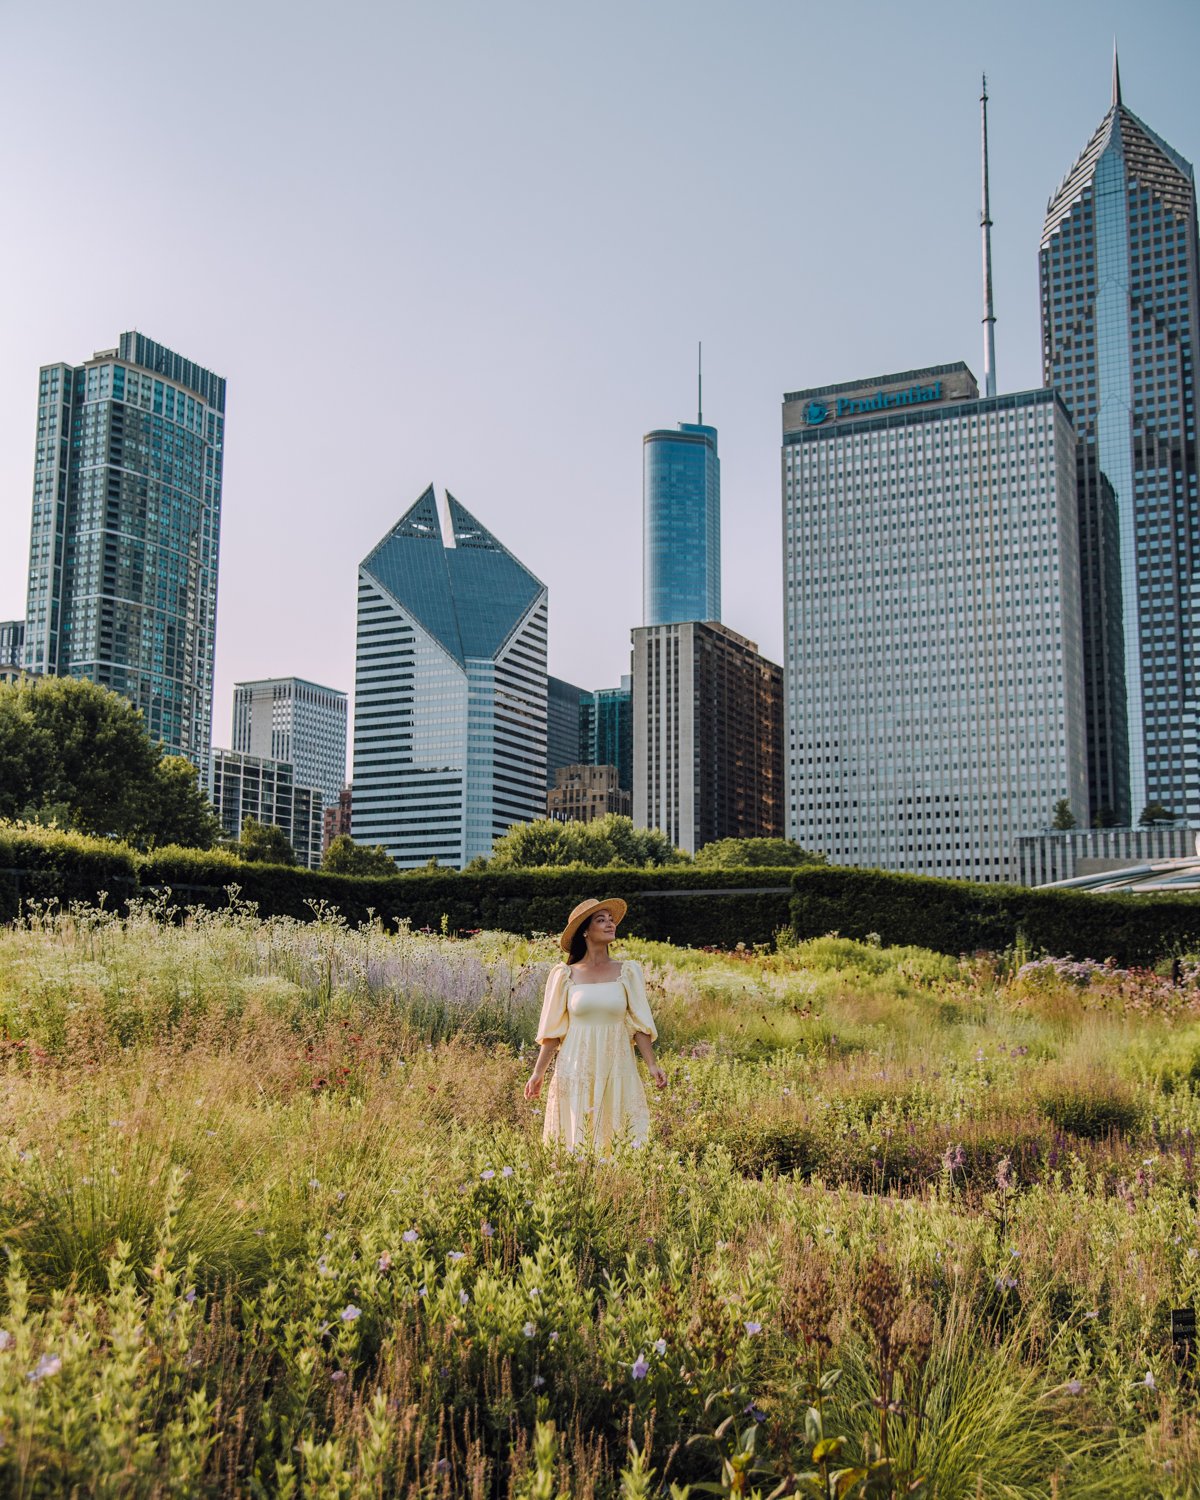 Girl in the Instagrammable Lurie Garden in Chicago